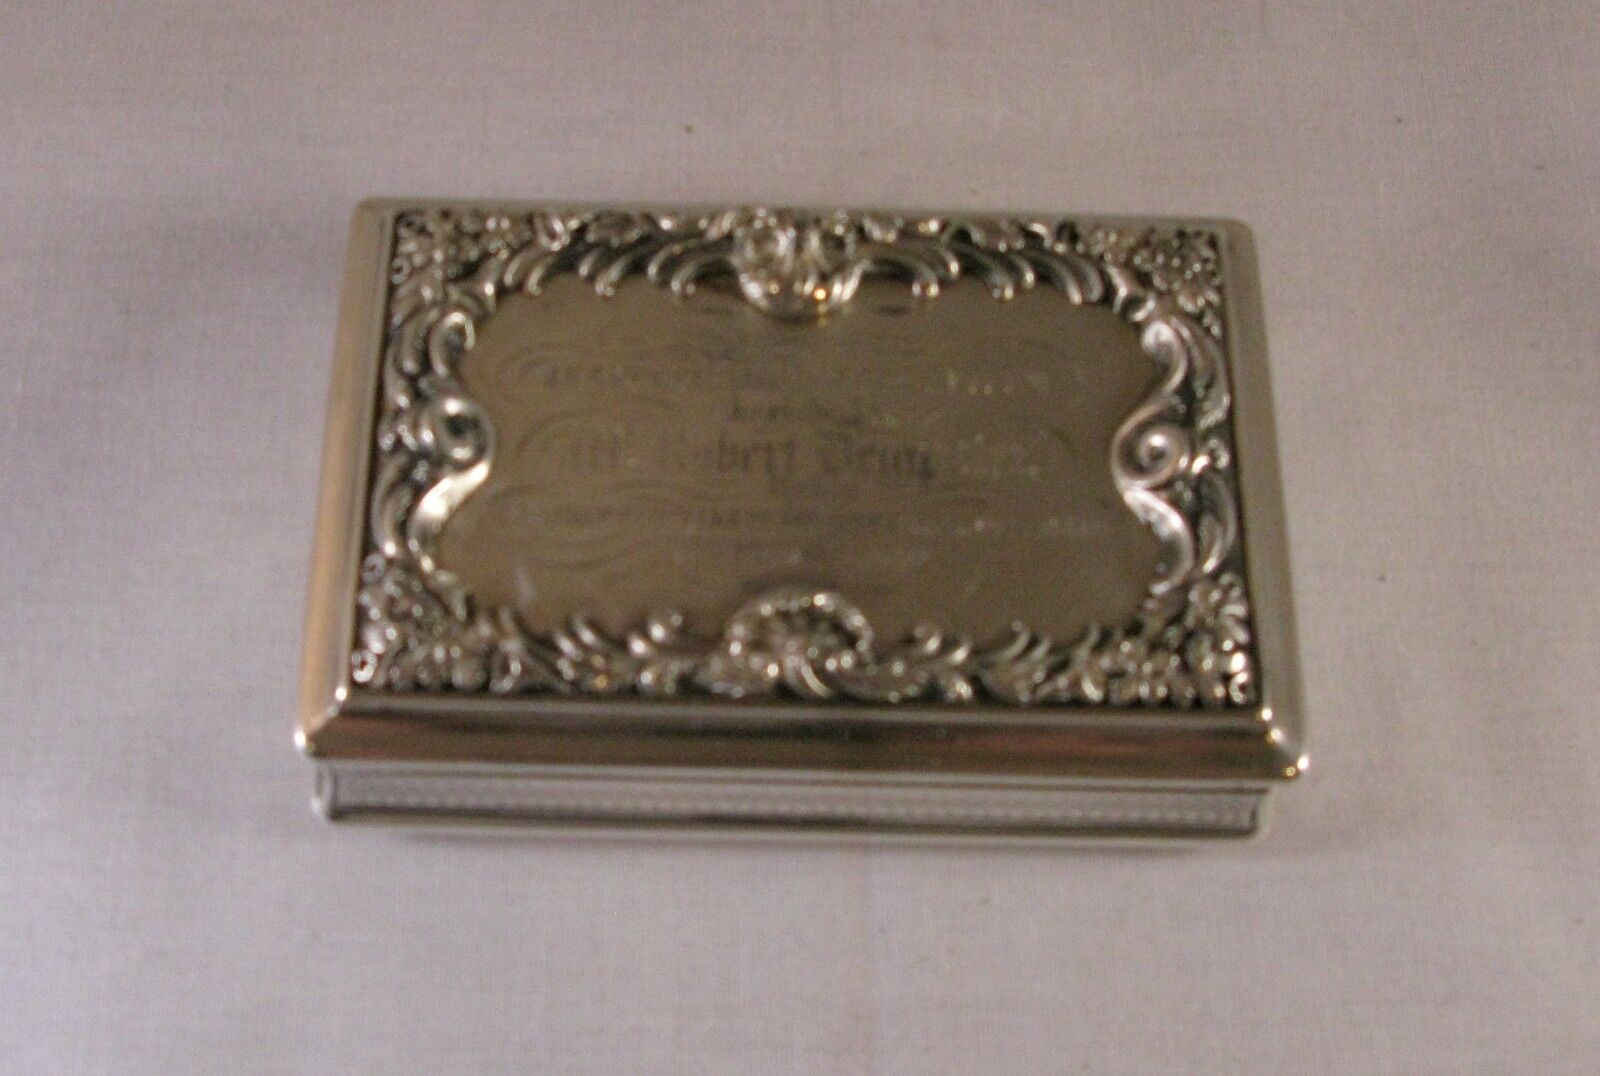 ANTIQUE STERLING SILVER SNUFF BOX BY EDWARD JOSEPH, BIRMINGHAM, 1836